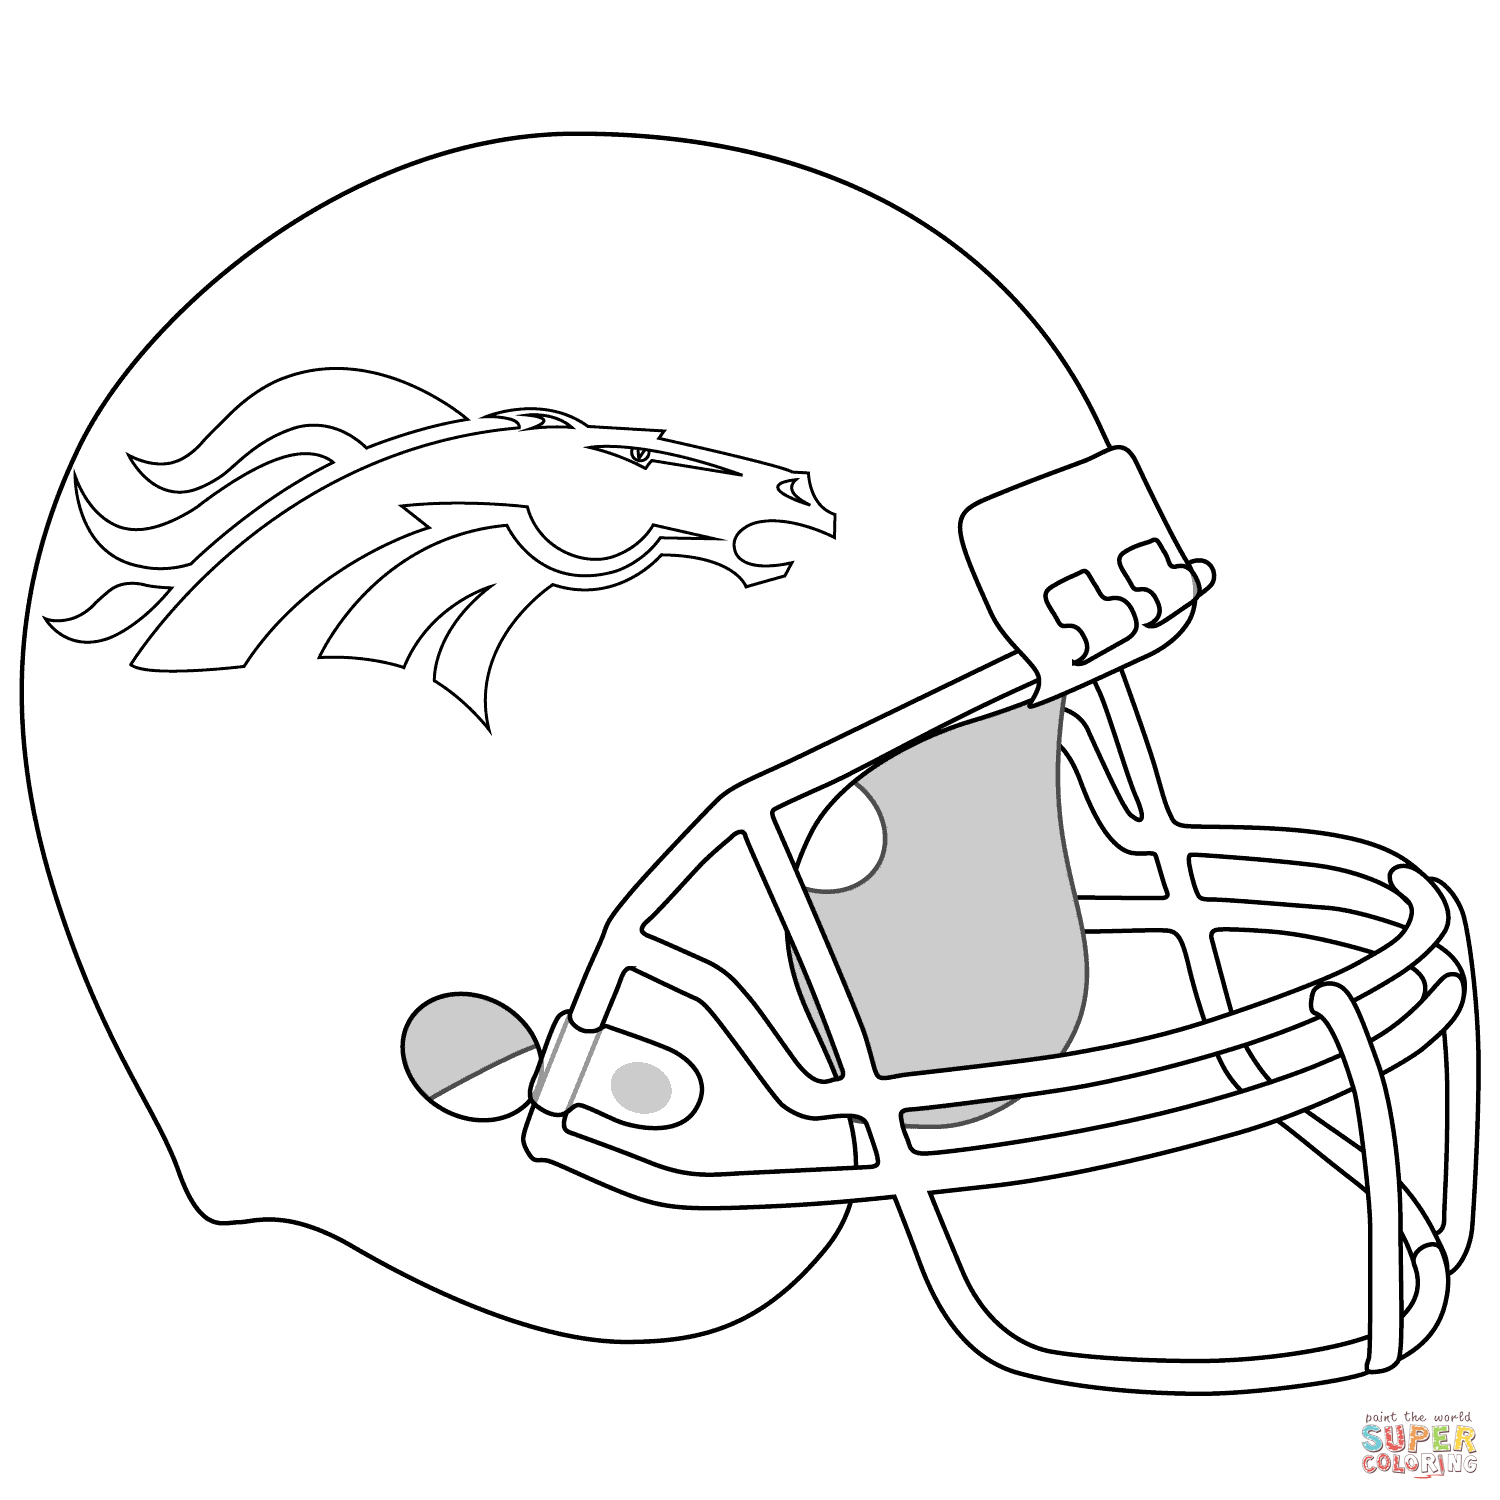 Super Bowl Coloring Pages Free Denver Broncos Helmet Coloring Page Free Printable Coloring Pages